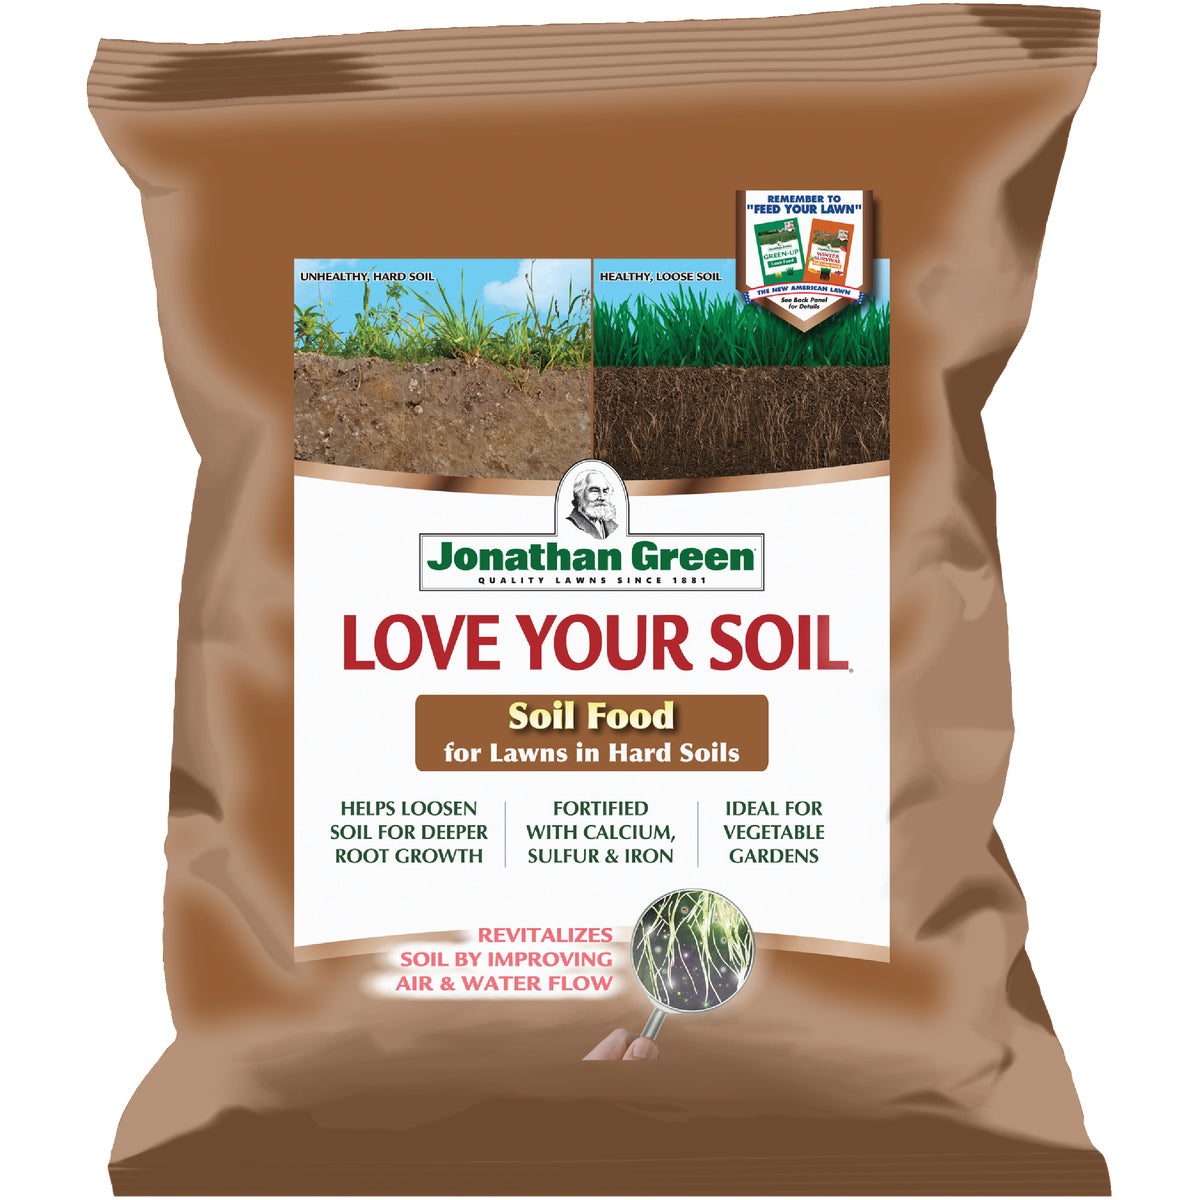 Item 702084, Organic soil food.